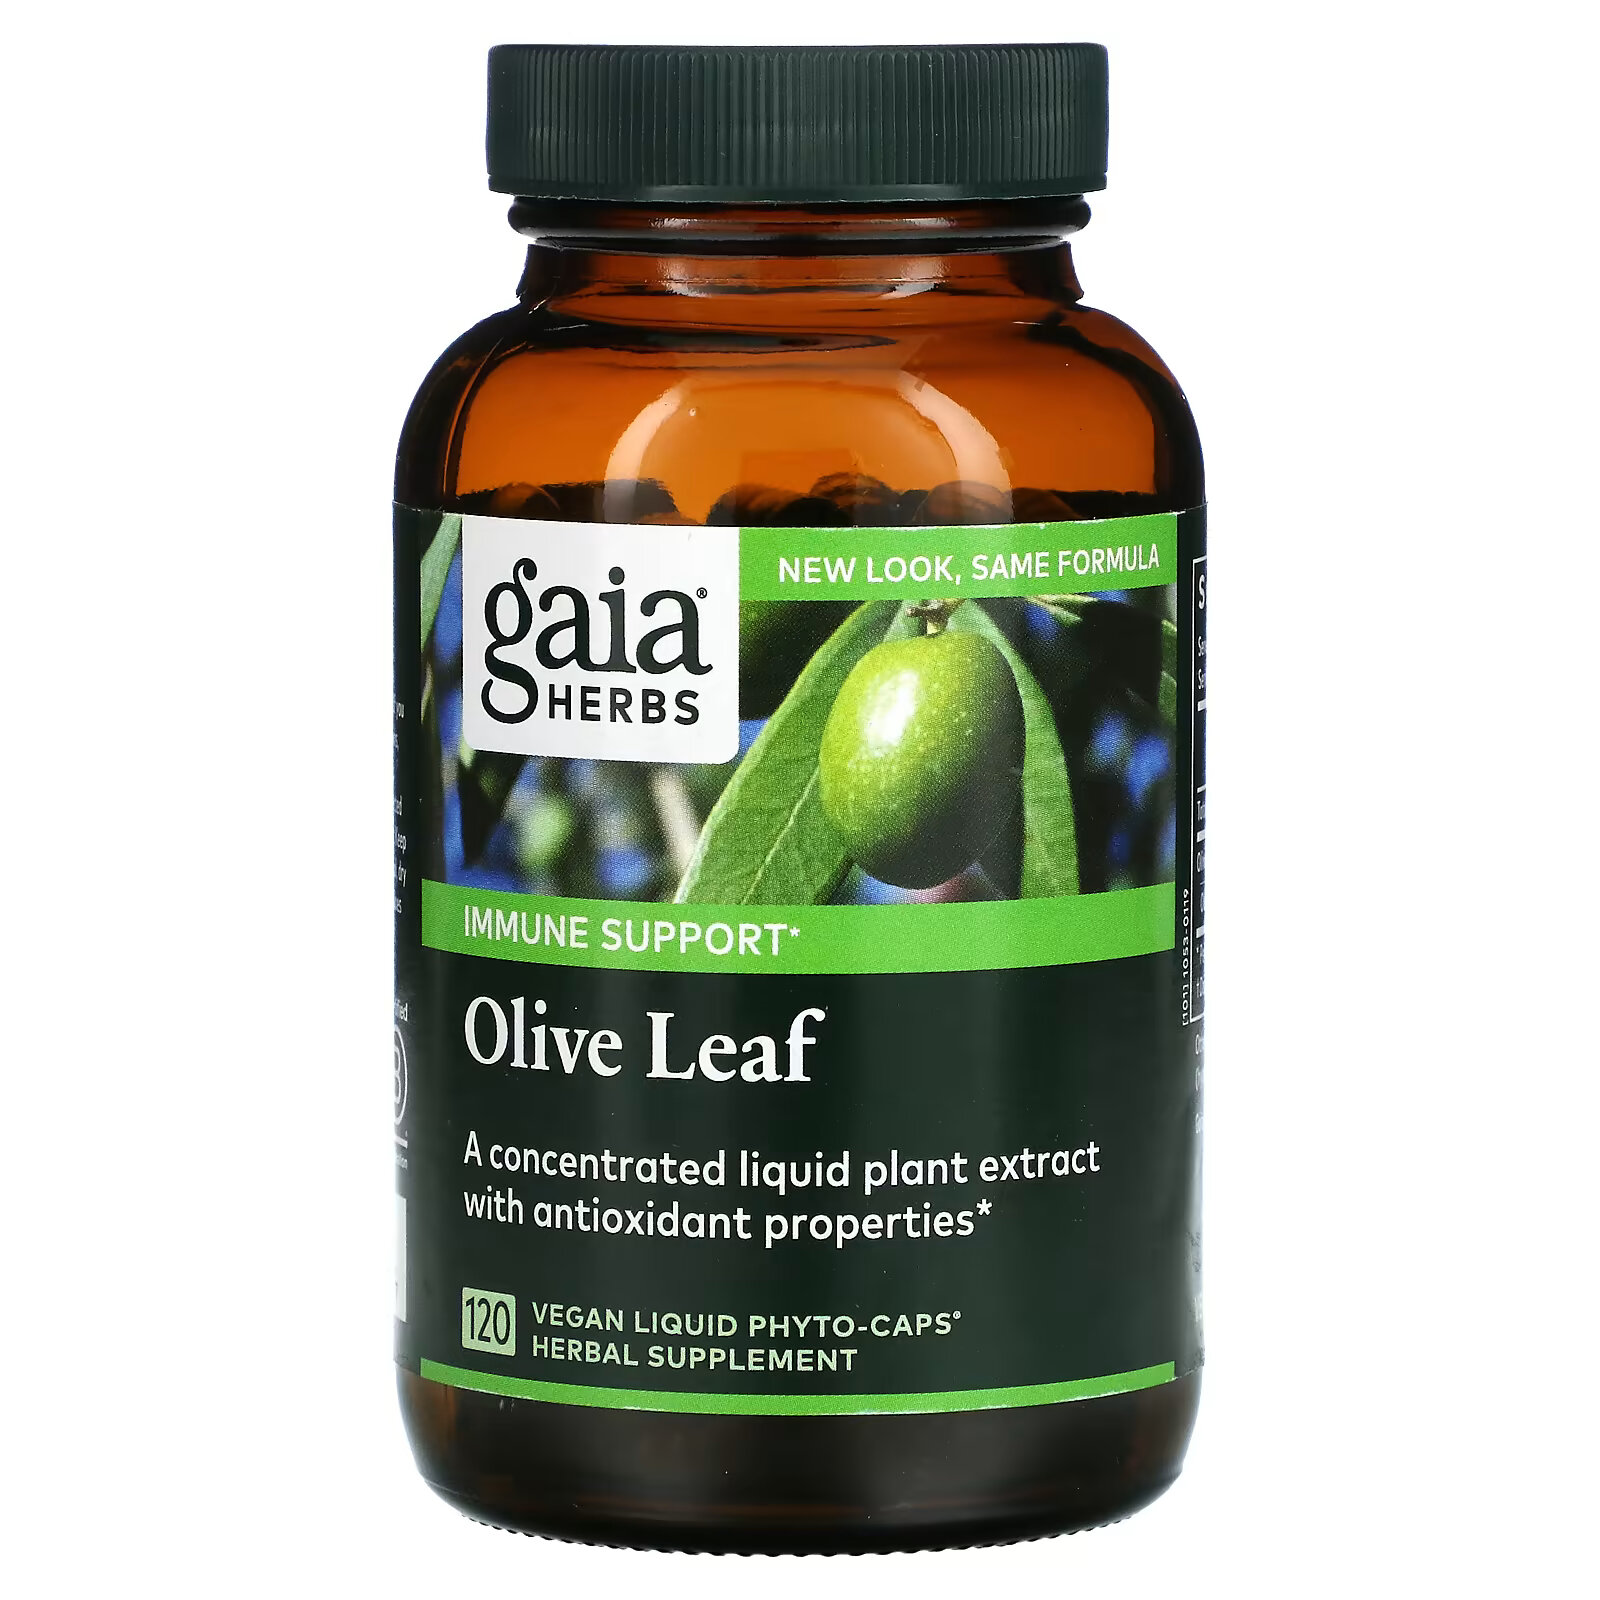 Gaia Herbs, Лист оливы, 120 веганских фито-капсул с жидкостью gaia herbs лист базилика священного 60 веганских фито капсул с жидкостью